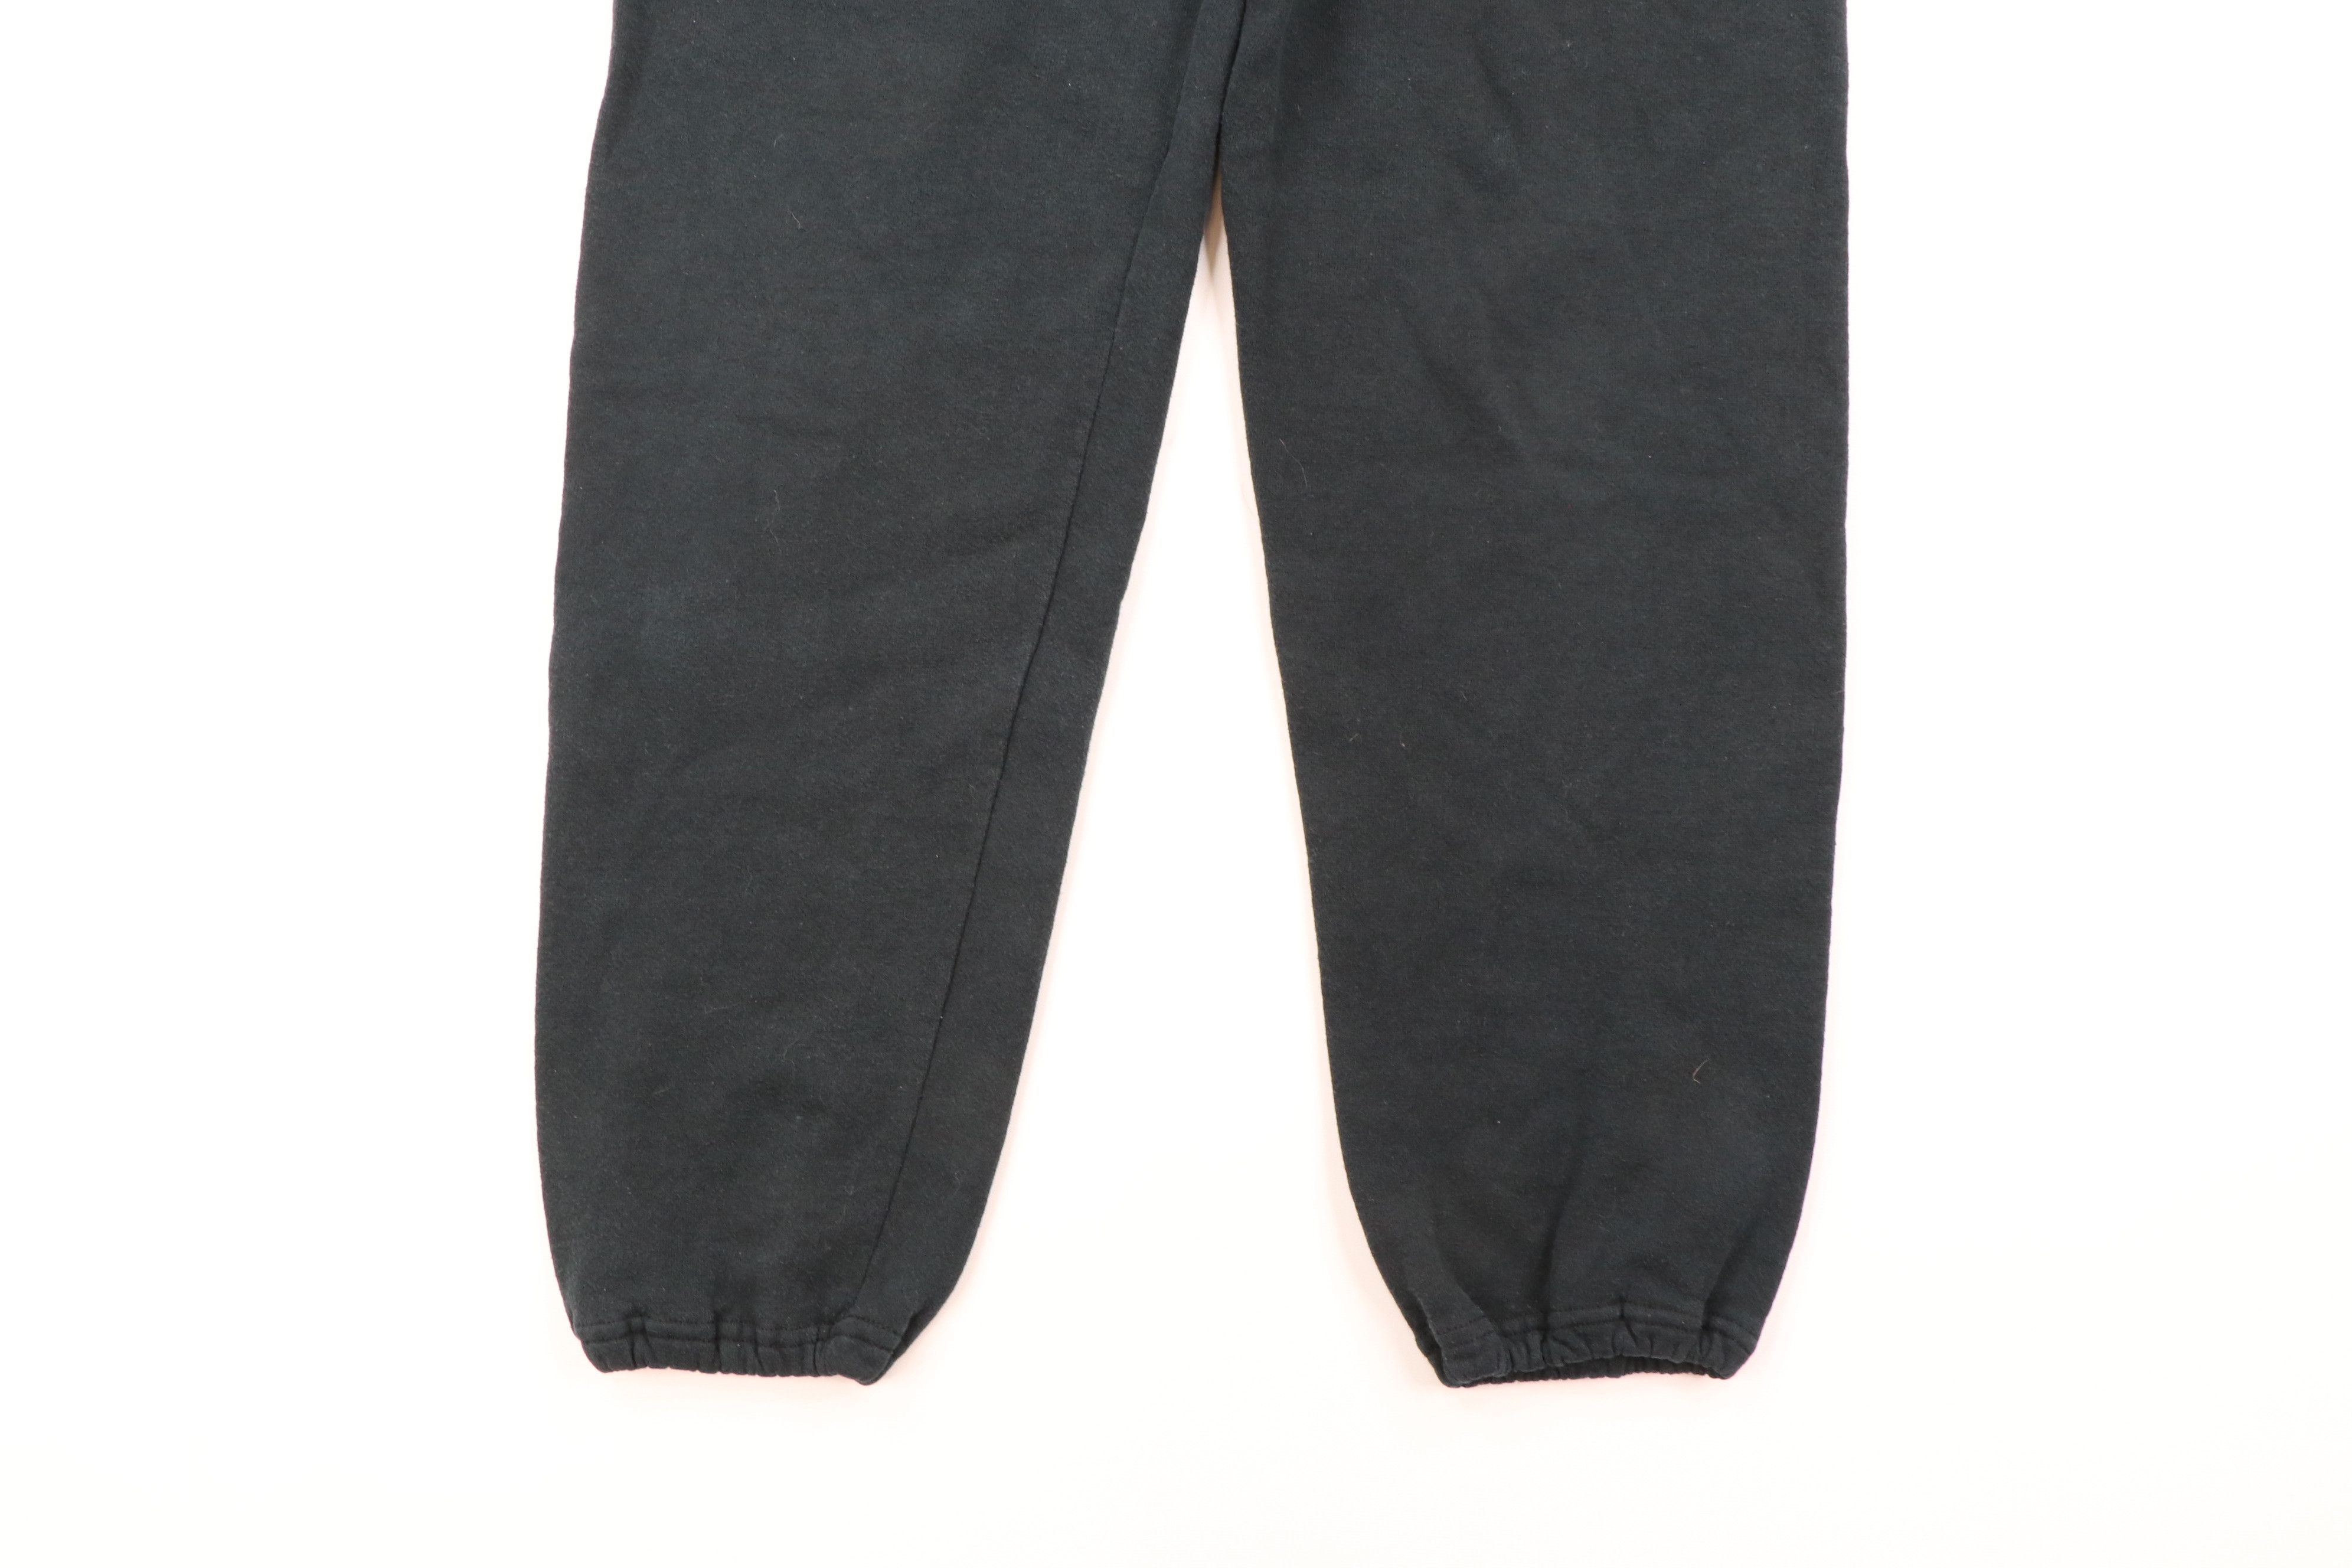 Vintage Vintage 90s Streetwear Faded Blank Sweatpants Joggers Pants Size US 36 / EU 52 - 3 Thumbnail